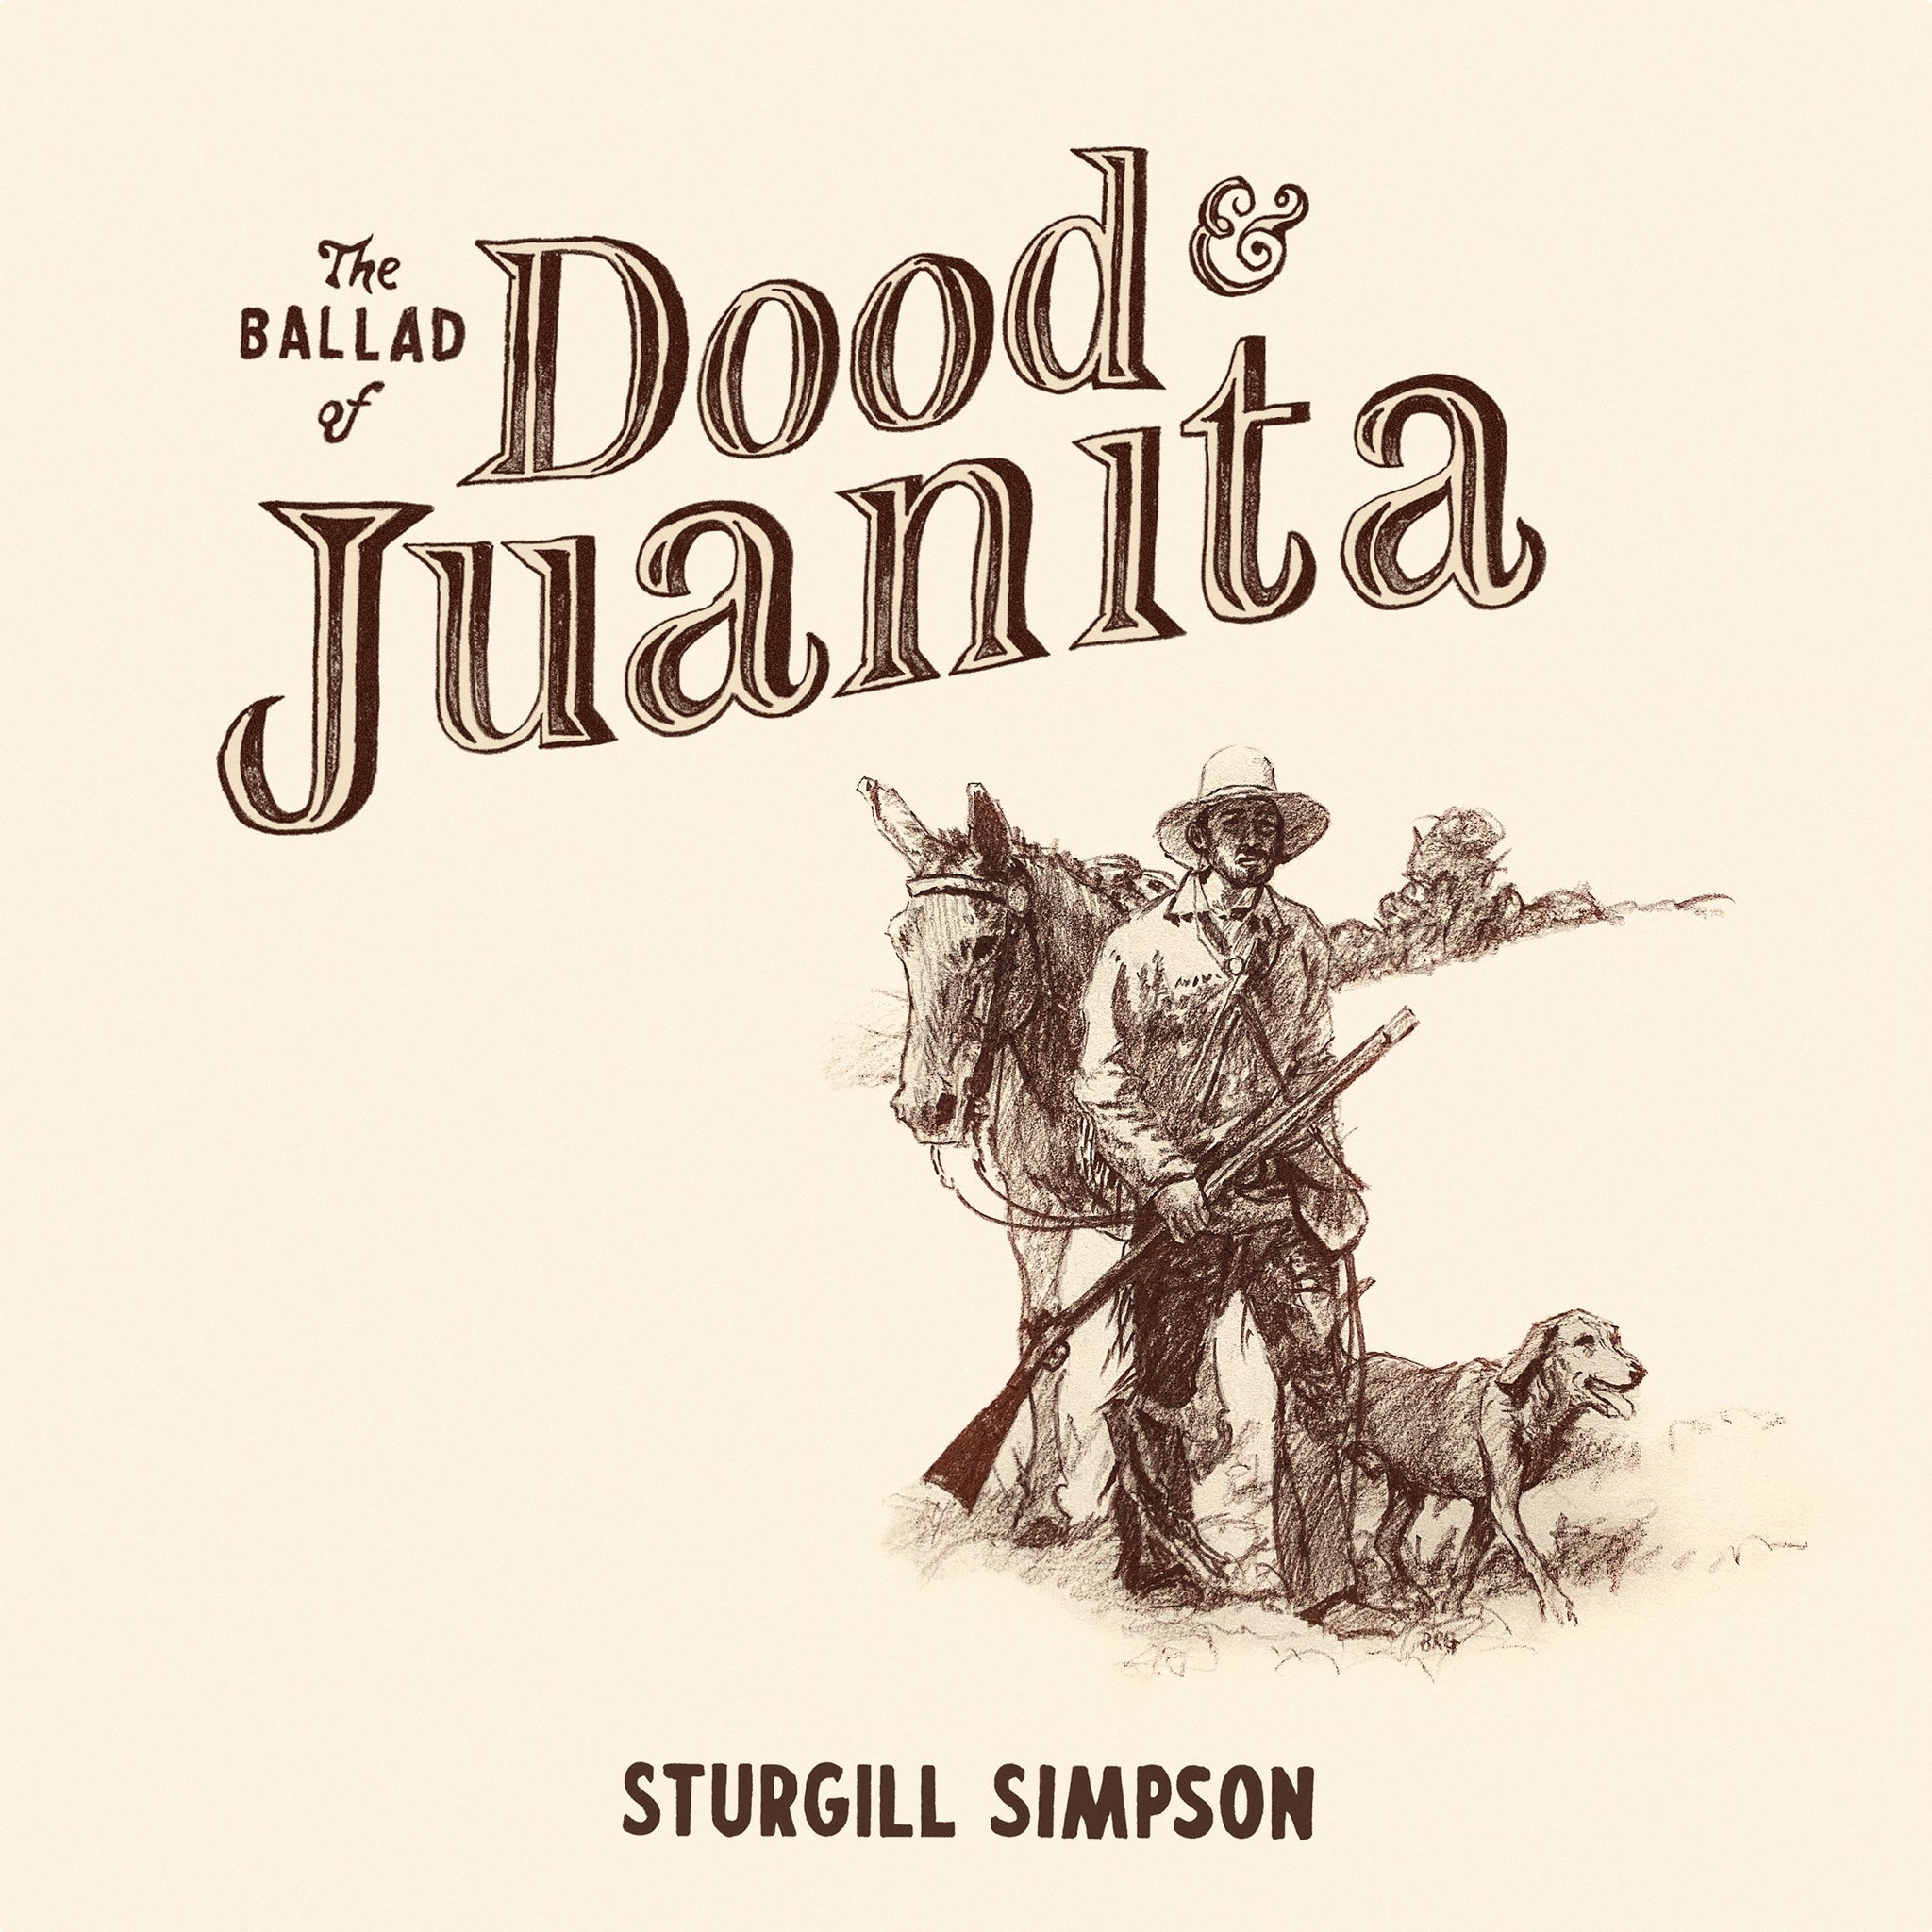 Sturgill Simpson - The Ballad of Dood and Juanita [Indie Exclusive Natural Vinyl LP]